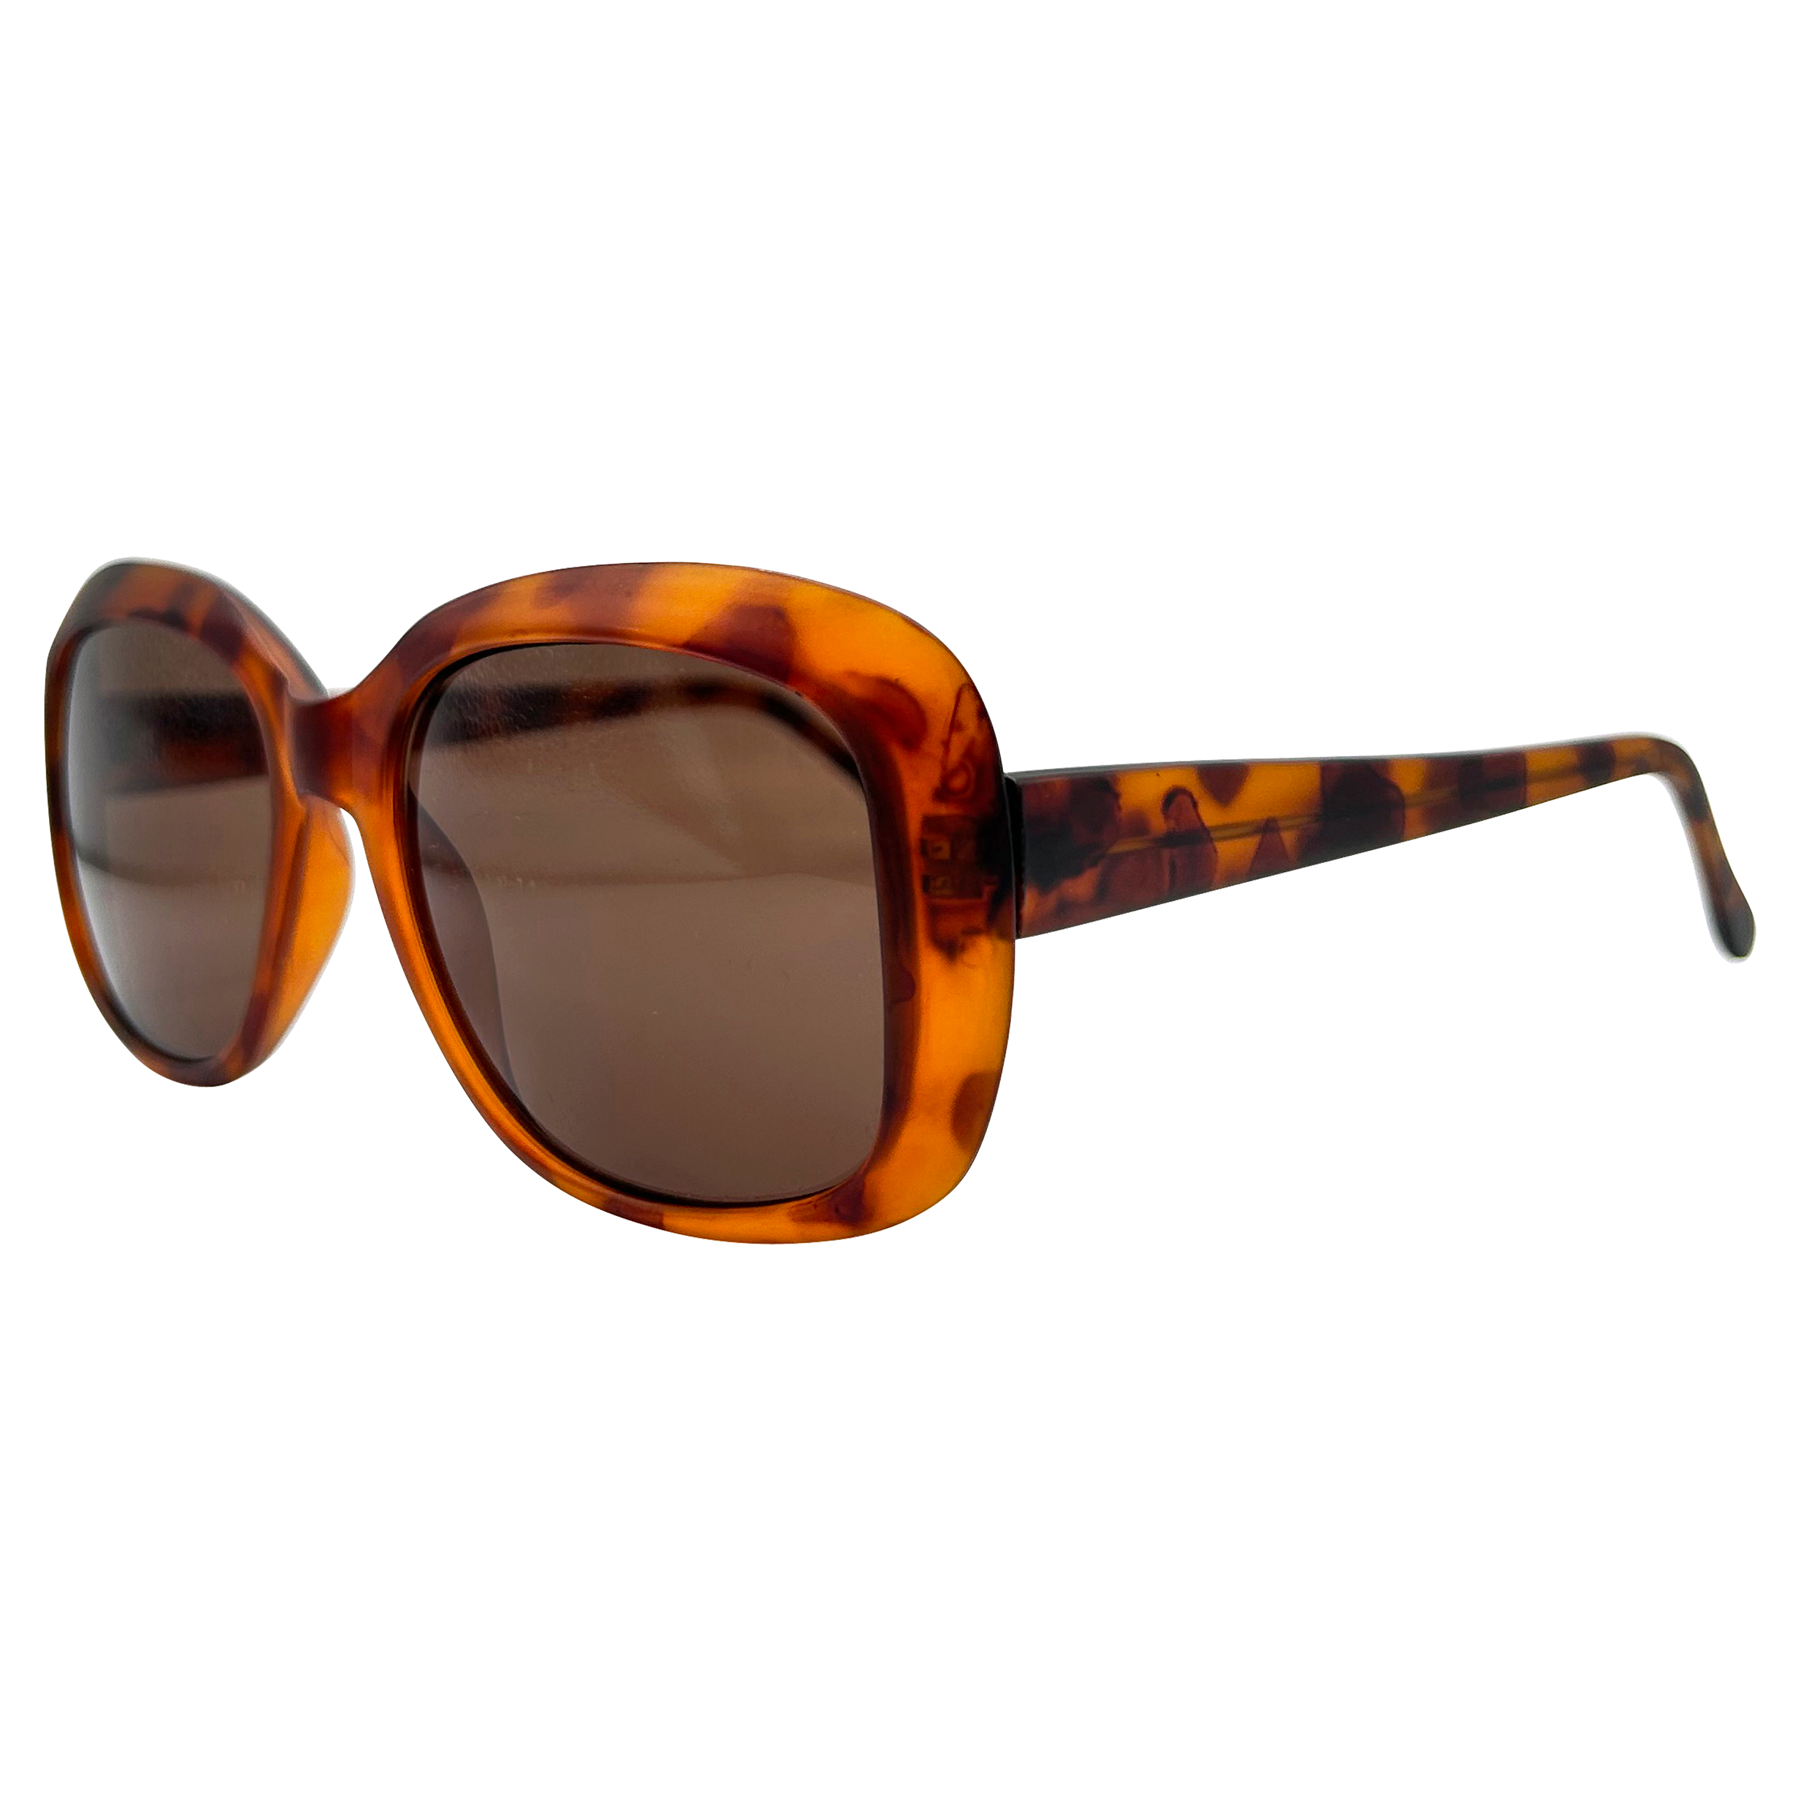 BLAKE Tortoise/Brown Square Sunglasses